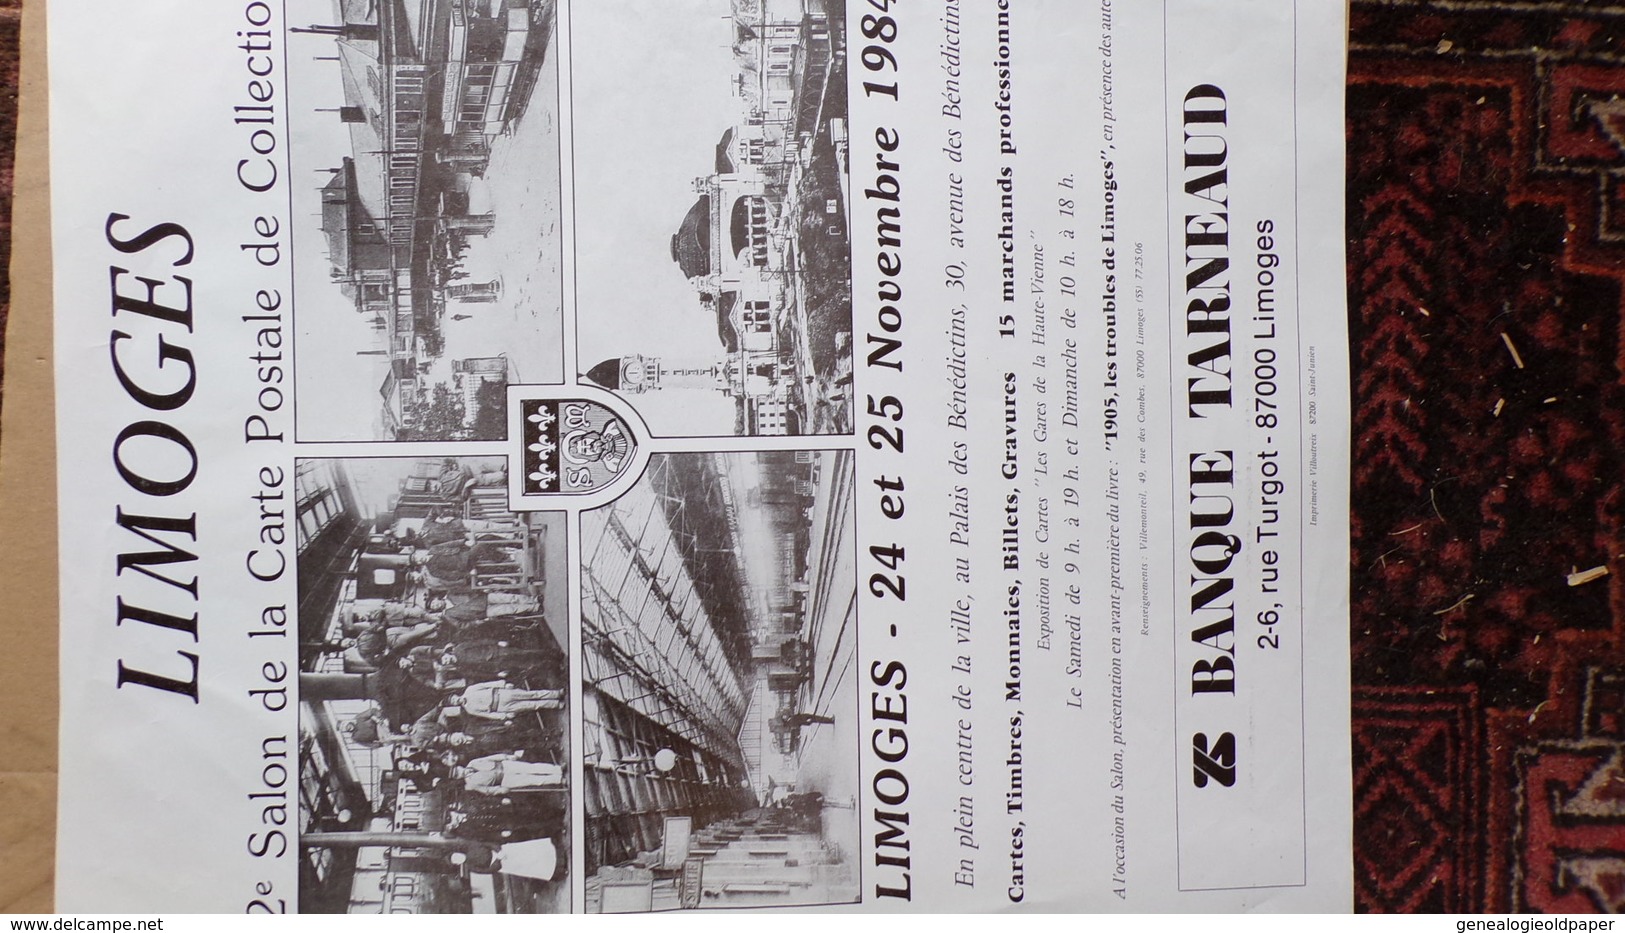 87 - LIMOGES- AFFICHE 2E SALON CARTE POSTALE 24-25 NOVEMBRE 1984- BANQUE TARNEAUD- GARE BENEDICTINS - Posters